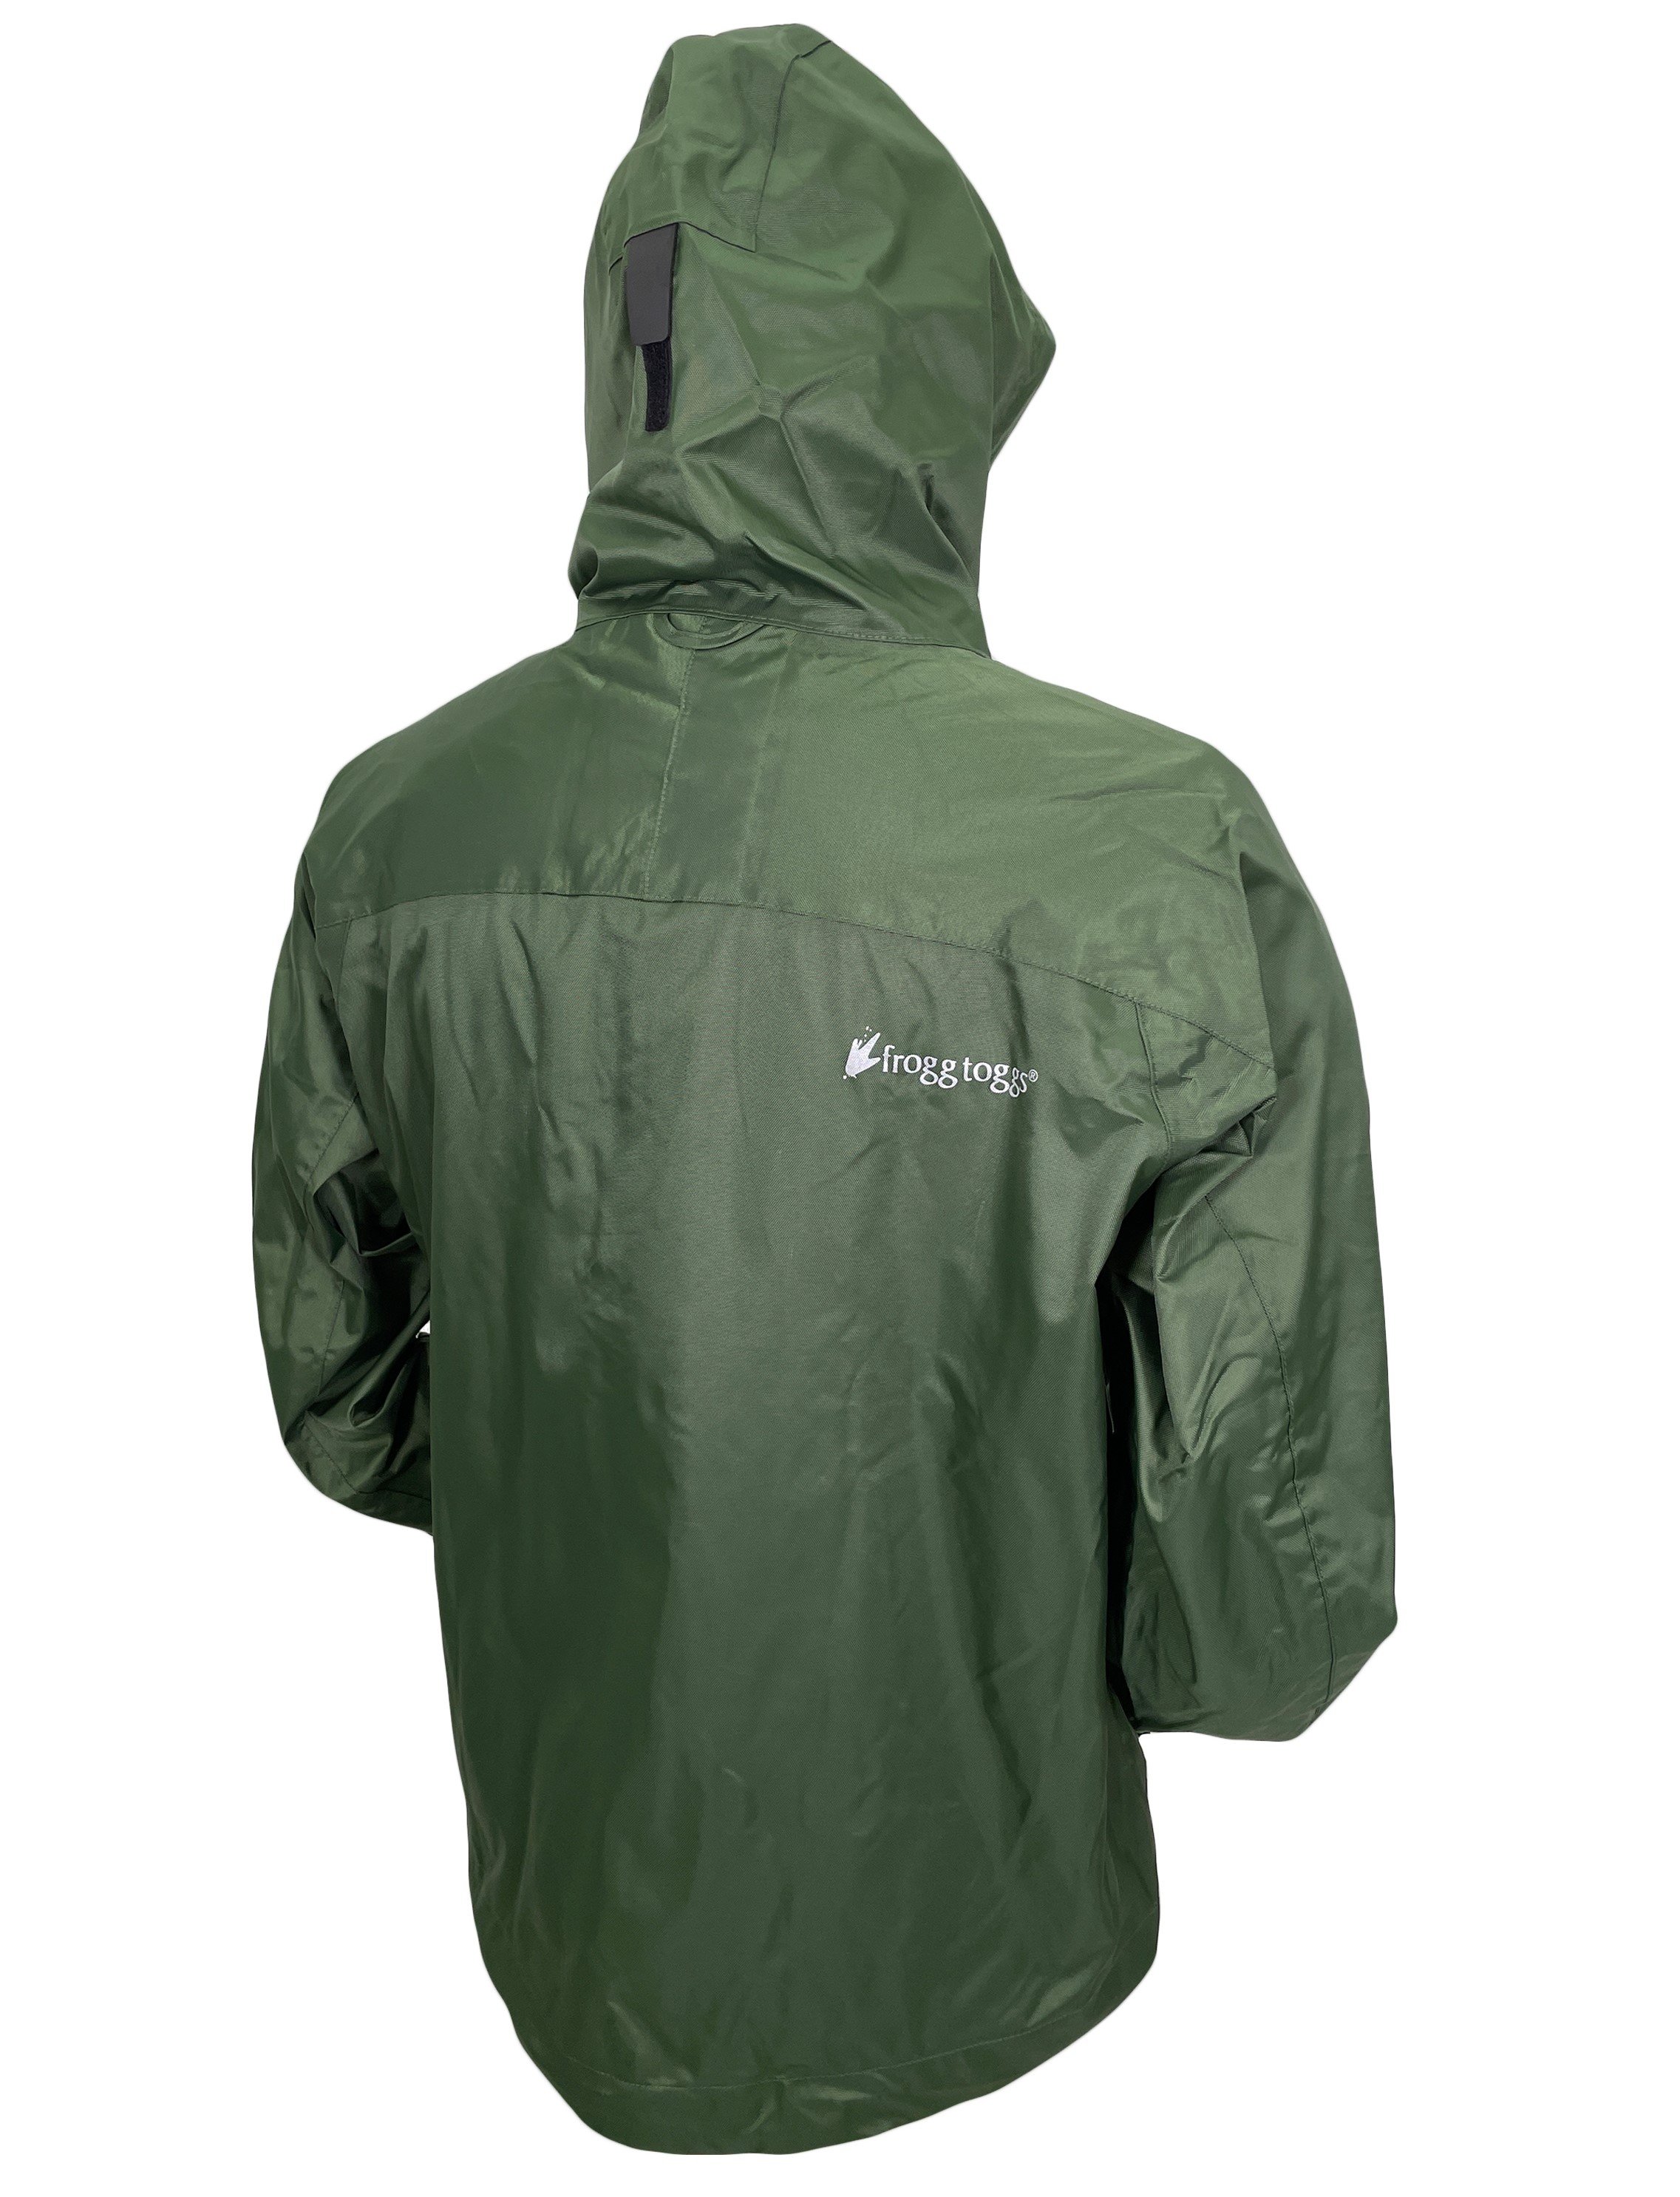 Magellan Outdoors Men's FishGear Lightweight Rain Jacket